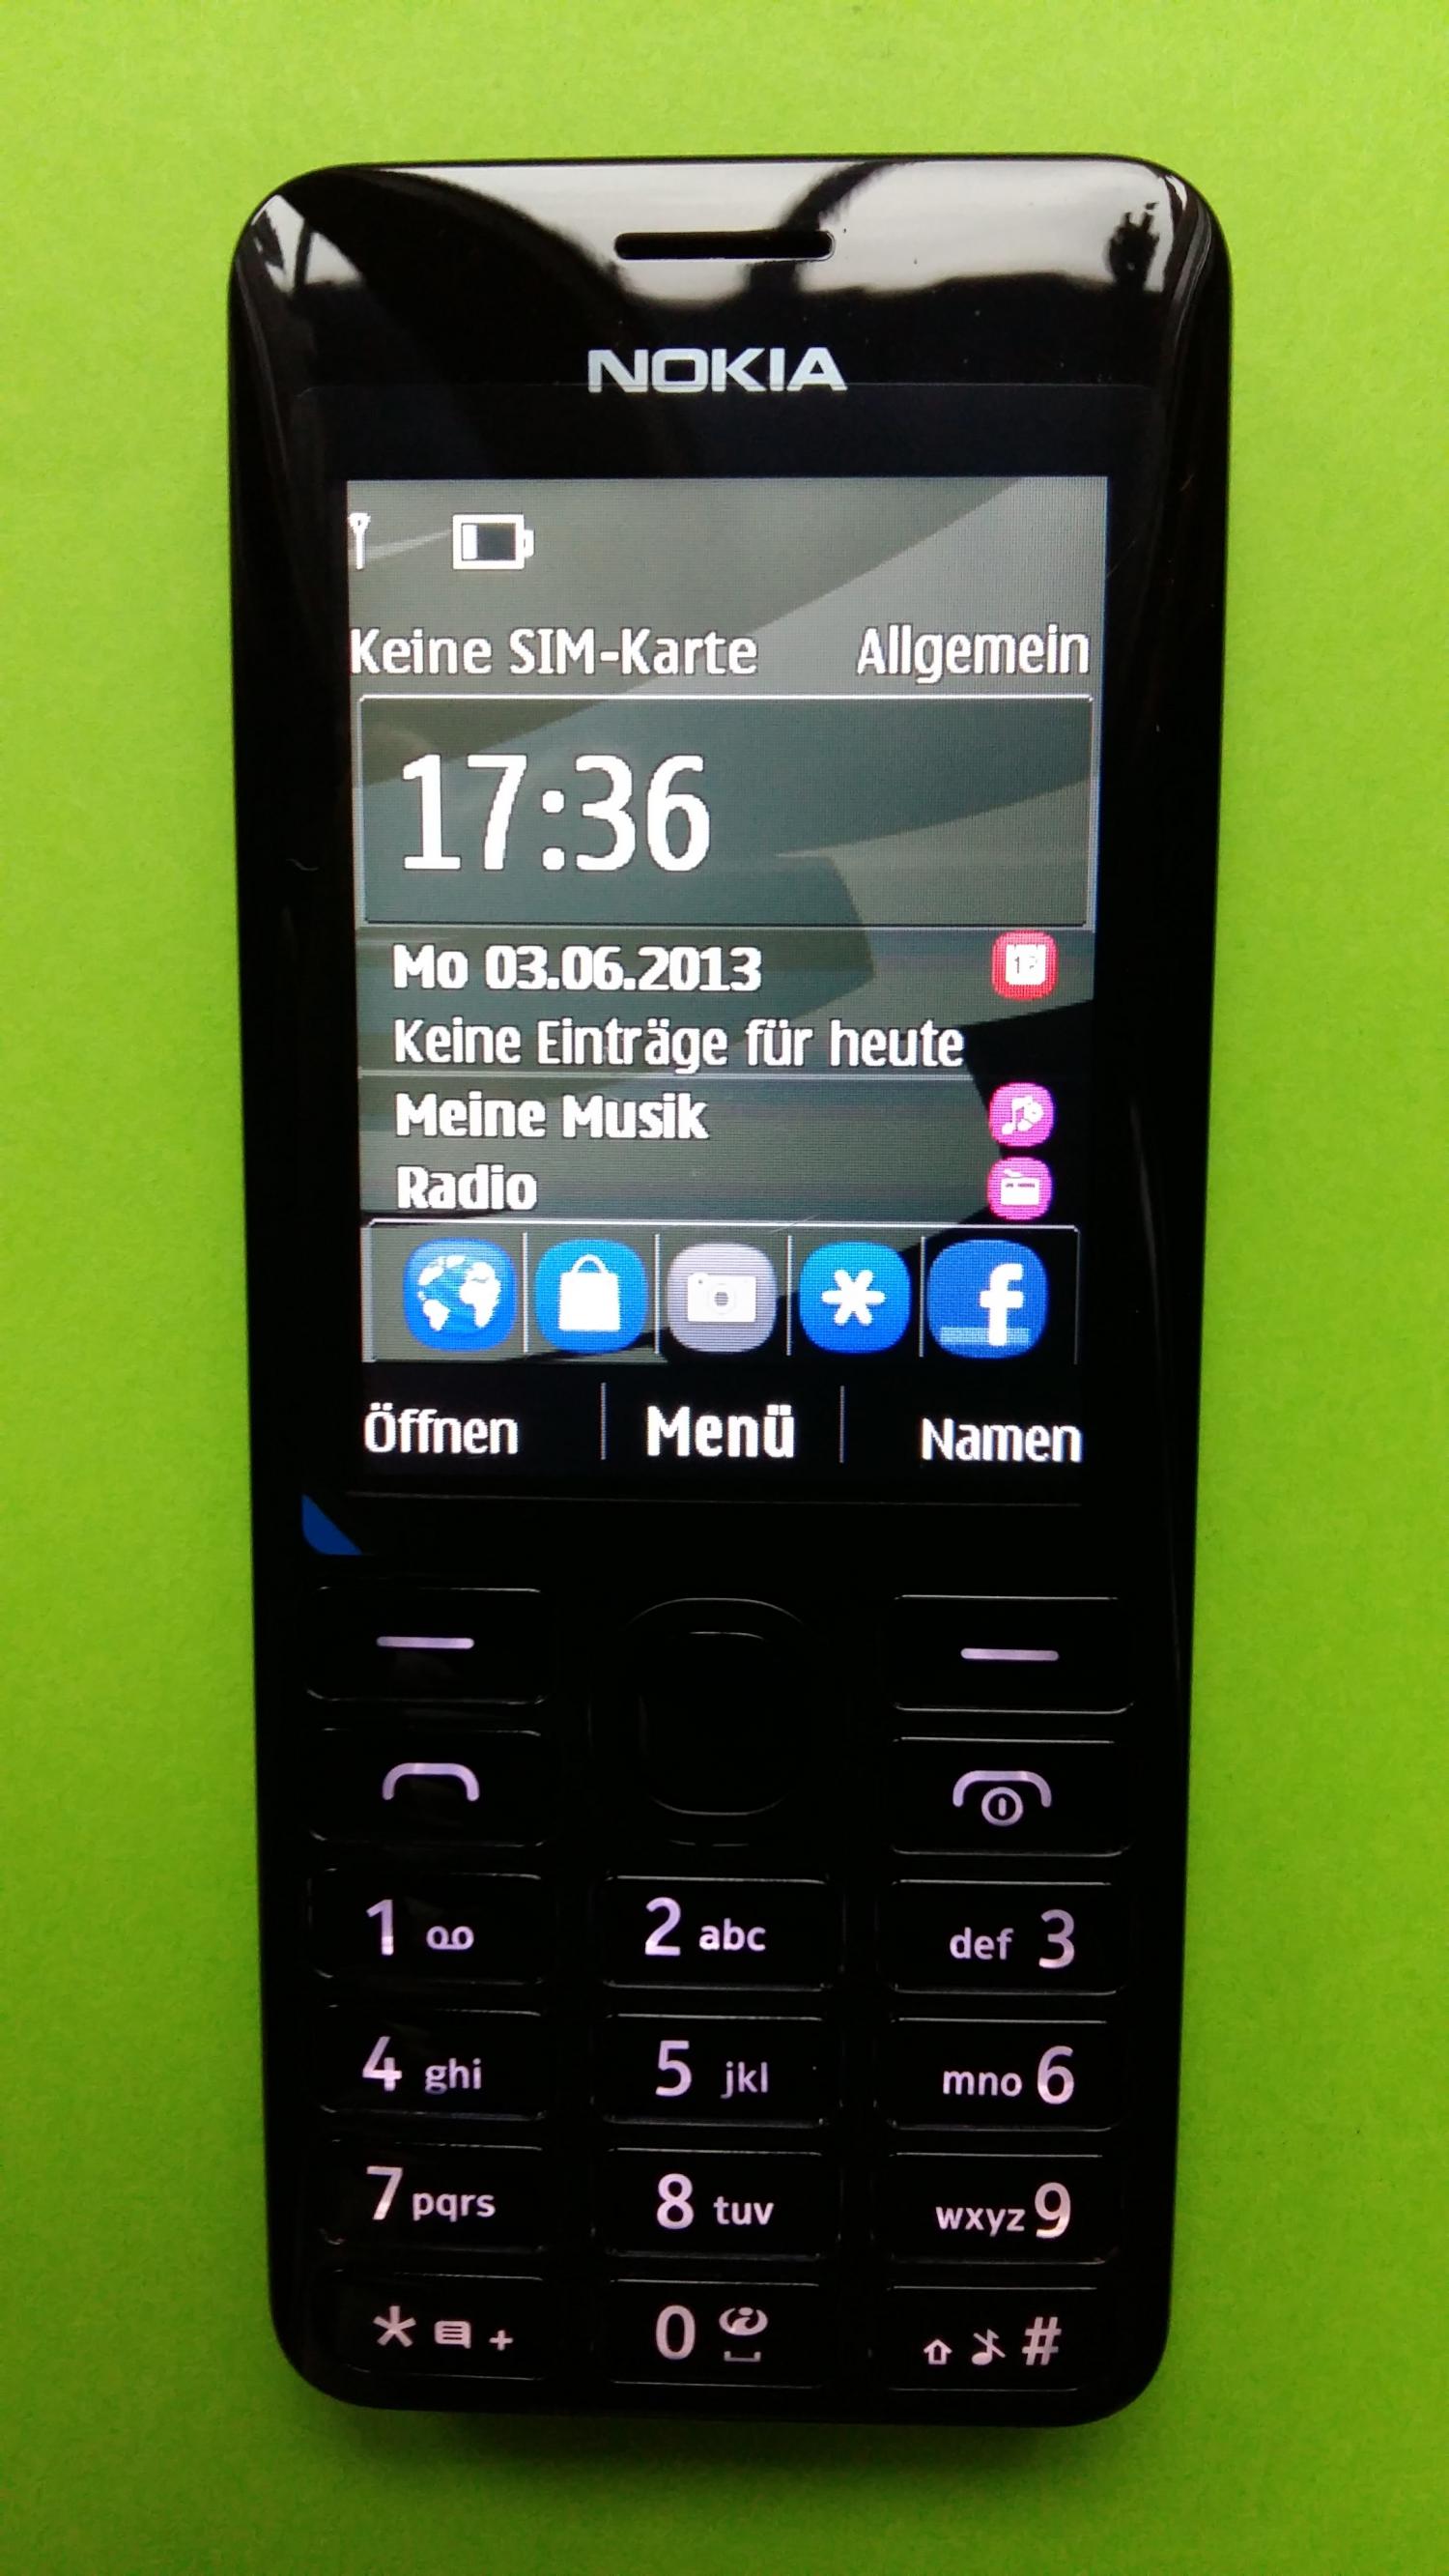 image-7299927-Nokia 206.1 Asha (1)1.jpg